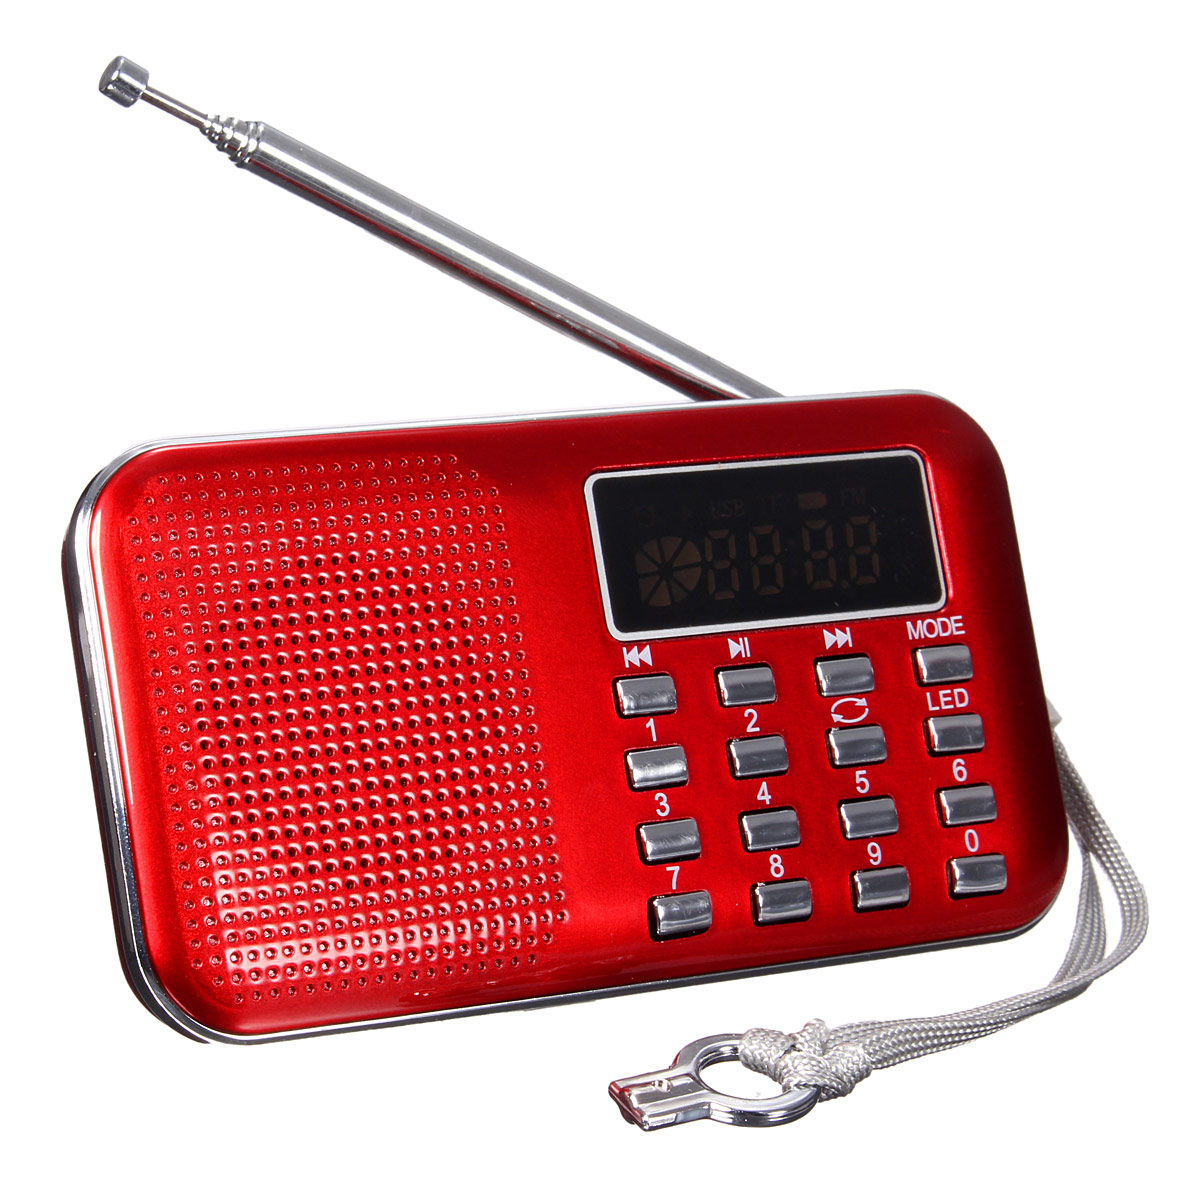 portable digital radio mp3 player